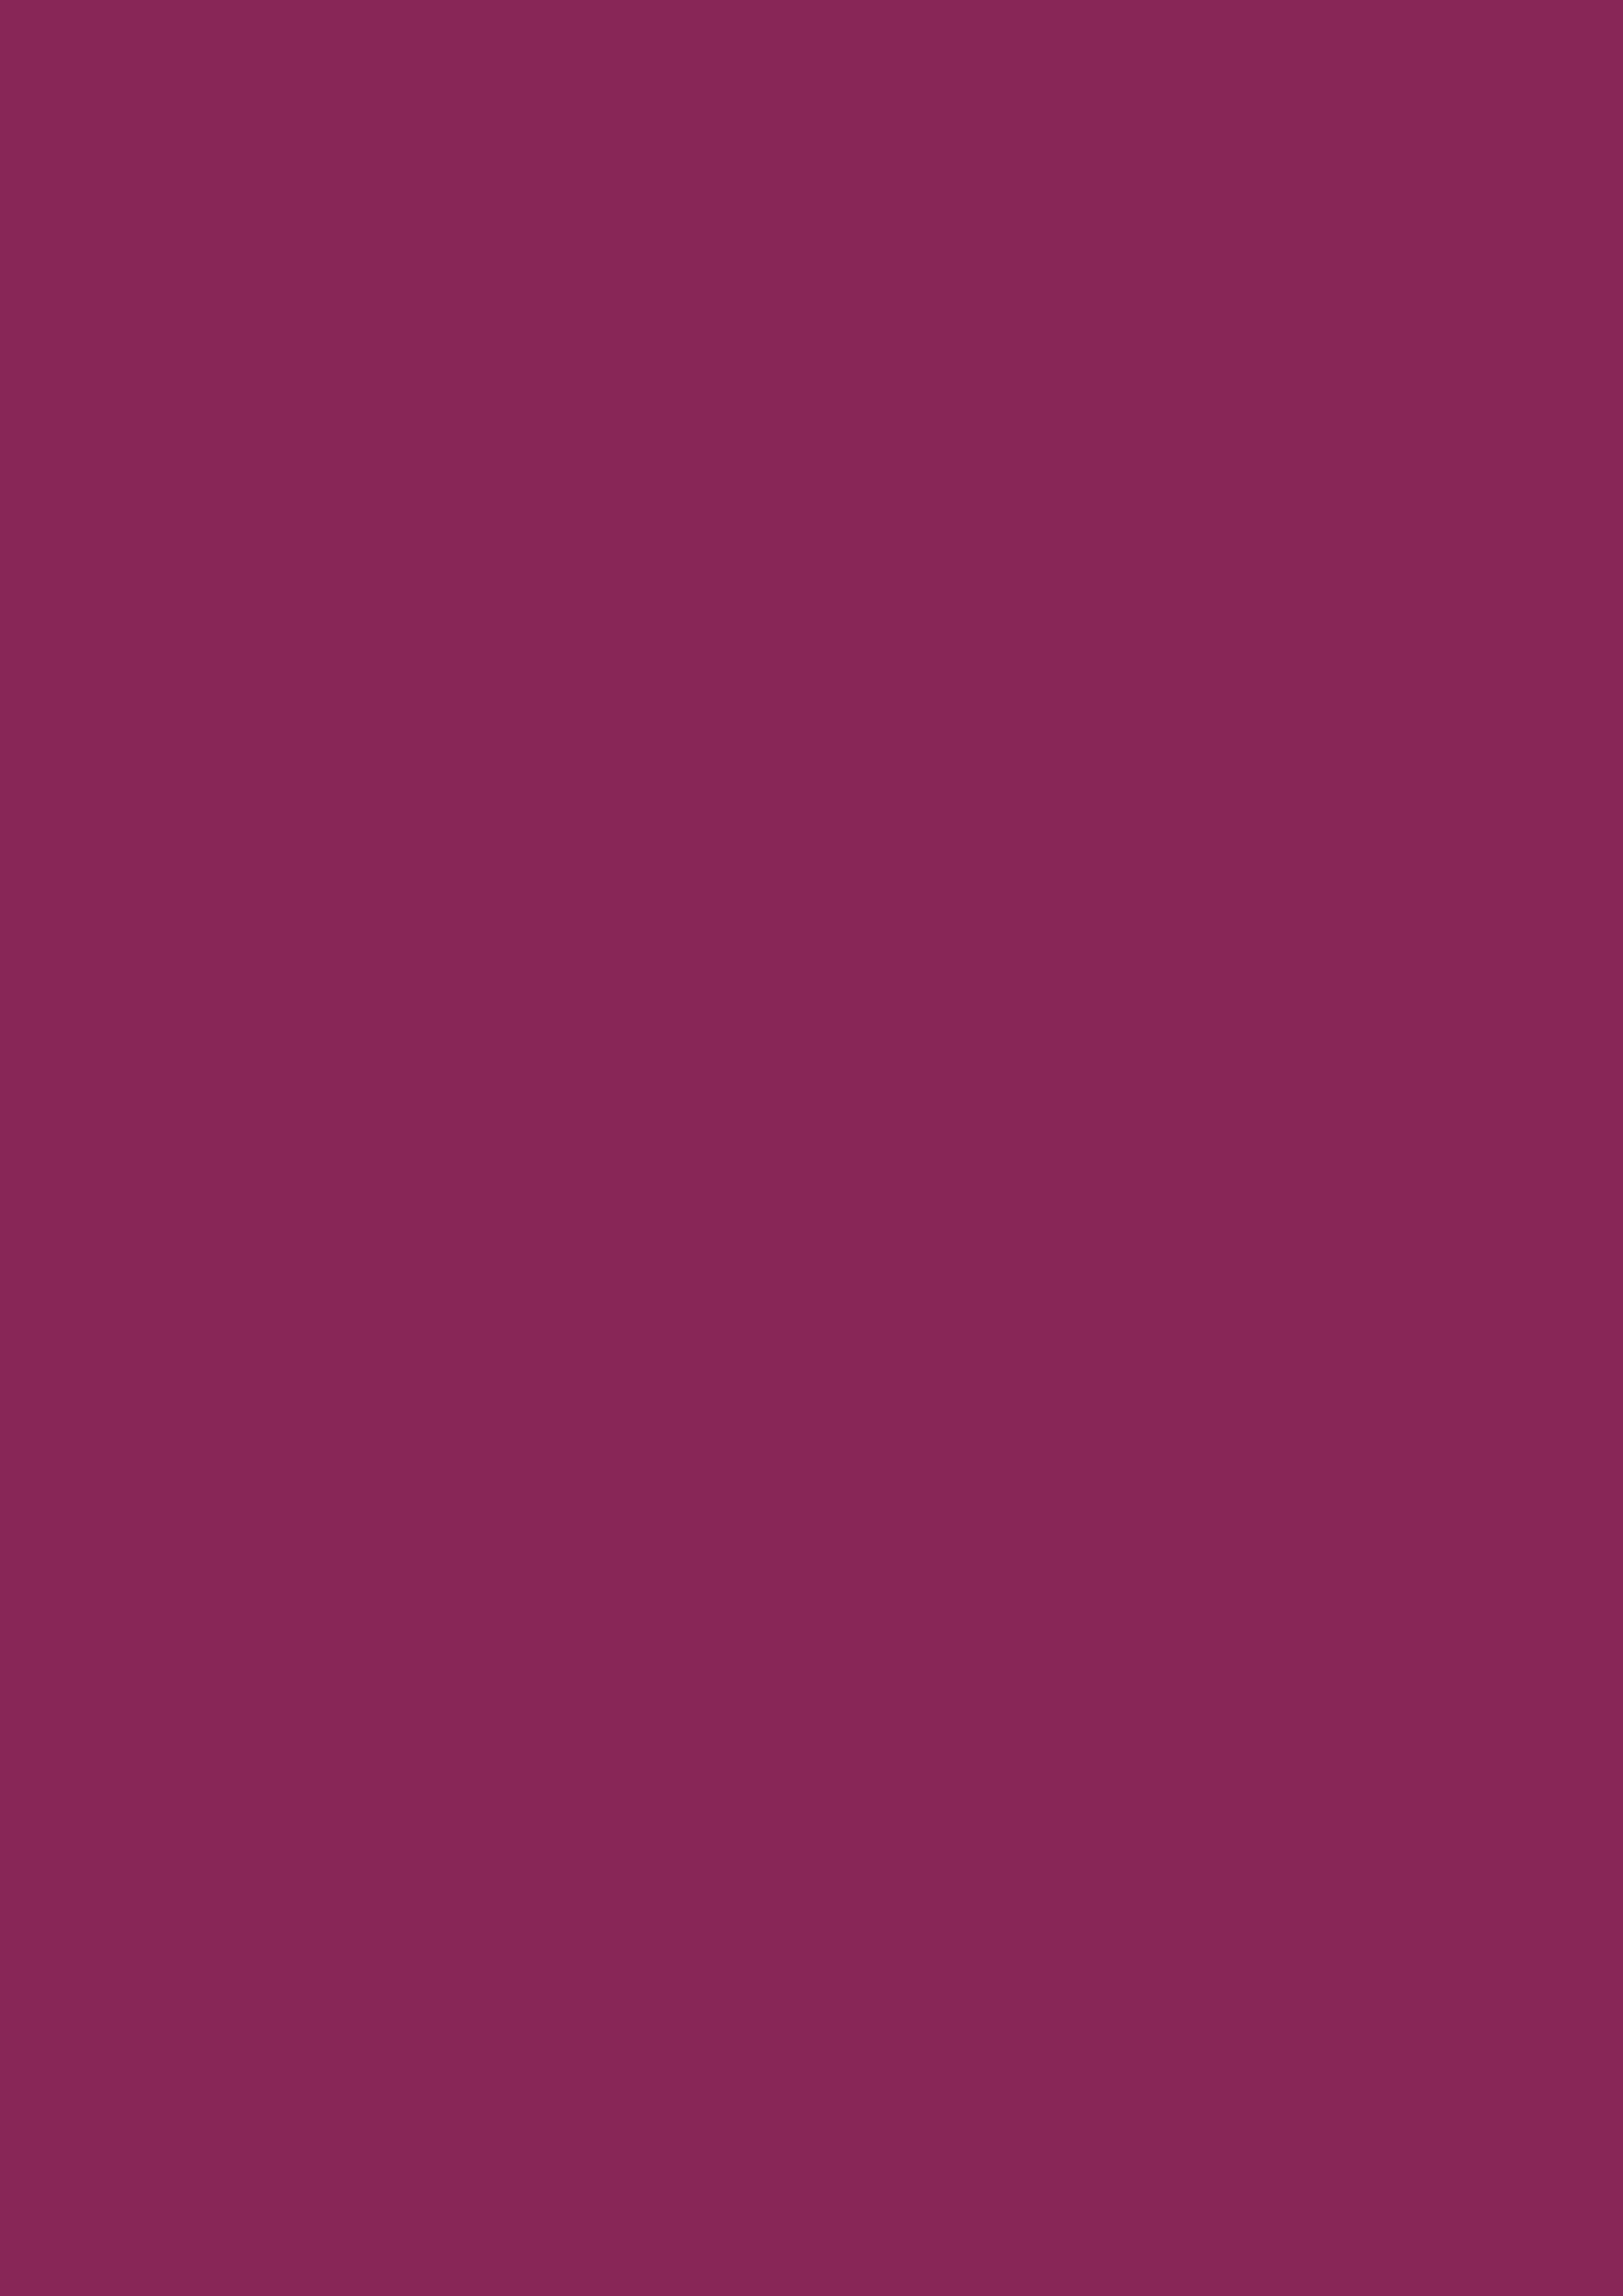 2480x3508 Dark Raspberry Solid Color Background